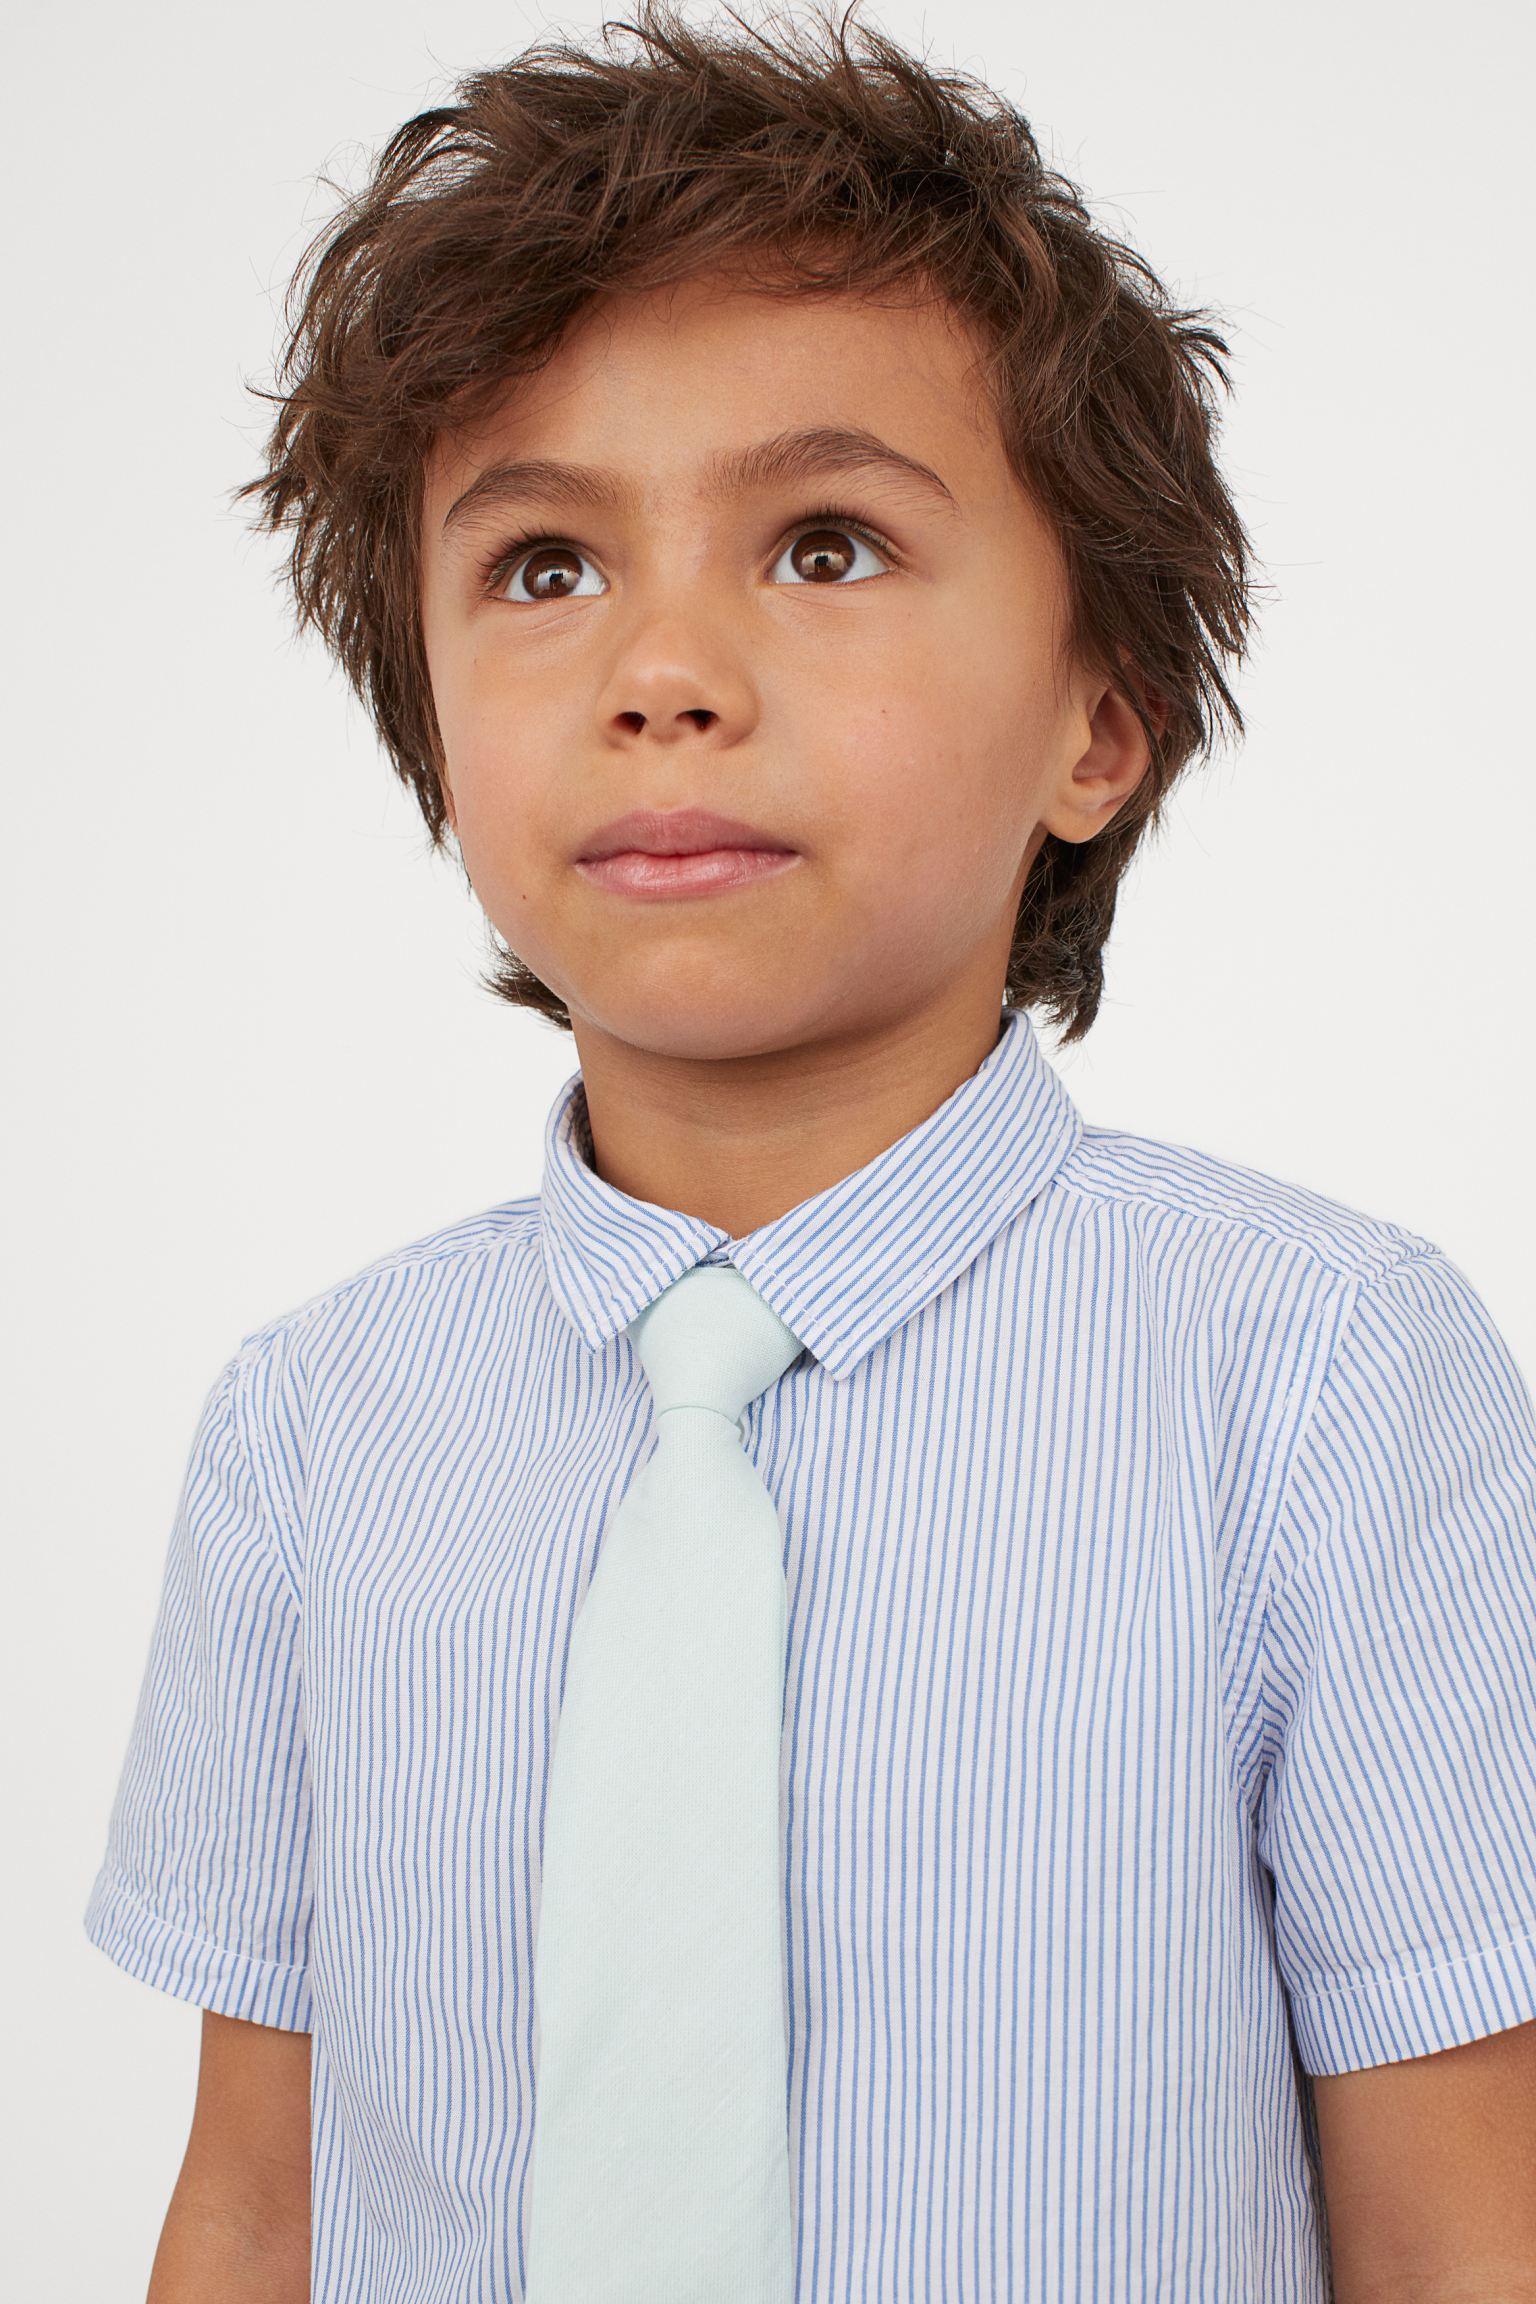 Отзыв на Рубашка с галстук/бабочка из Интернет-Магазина H&M